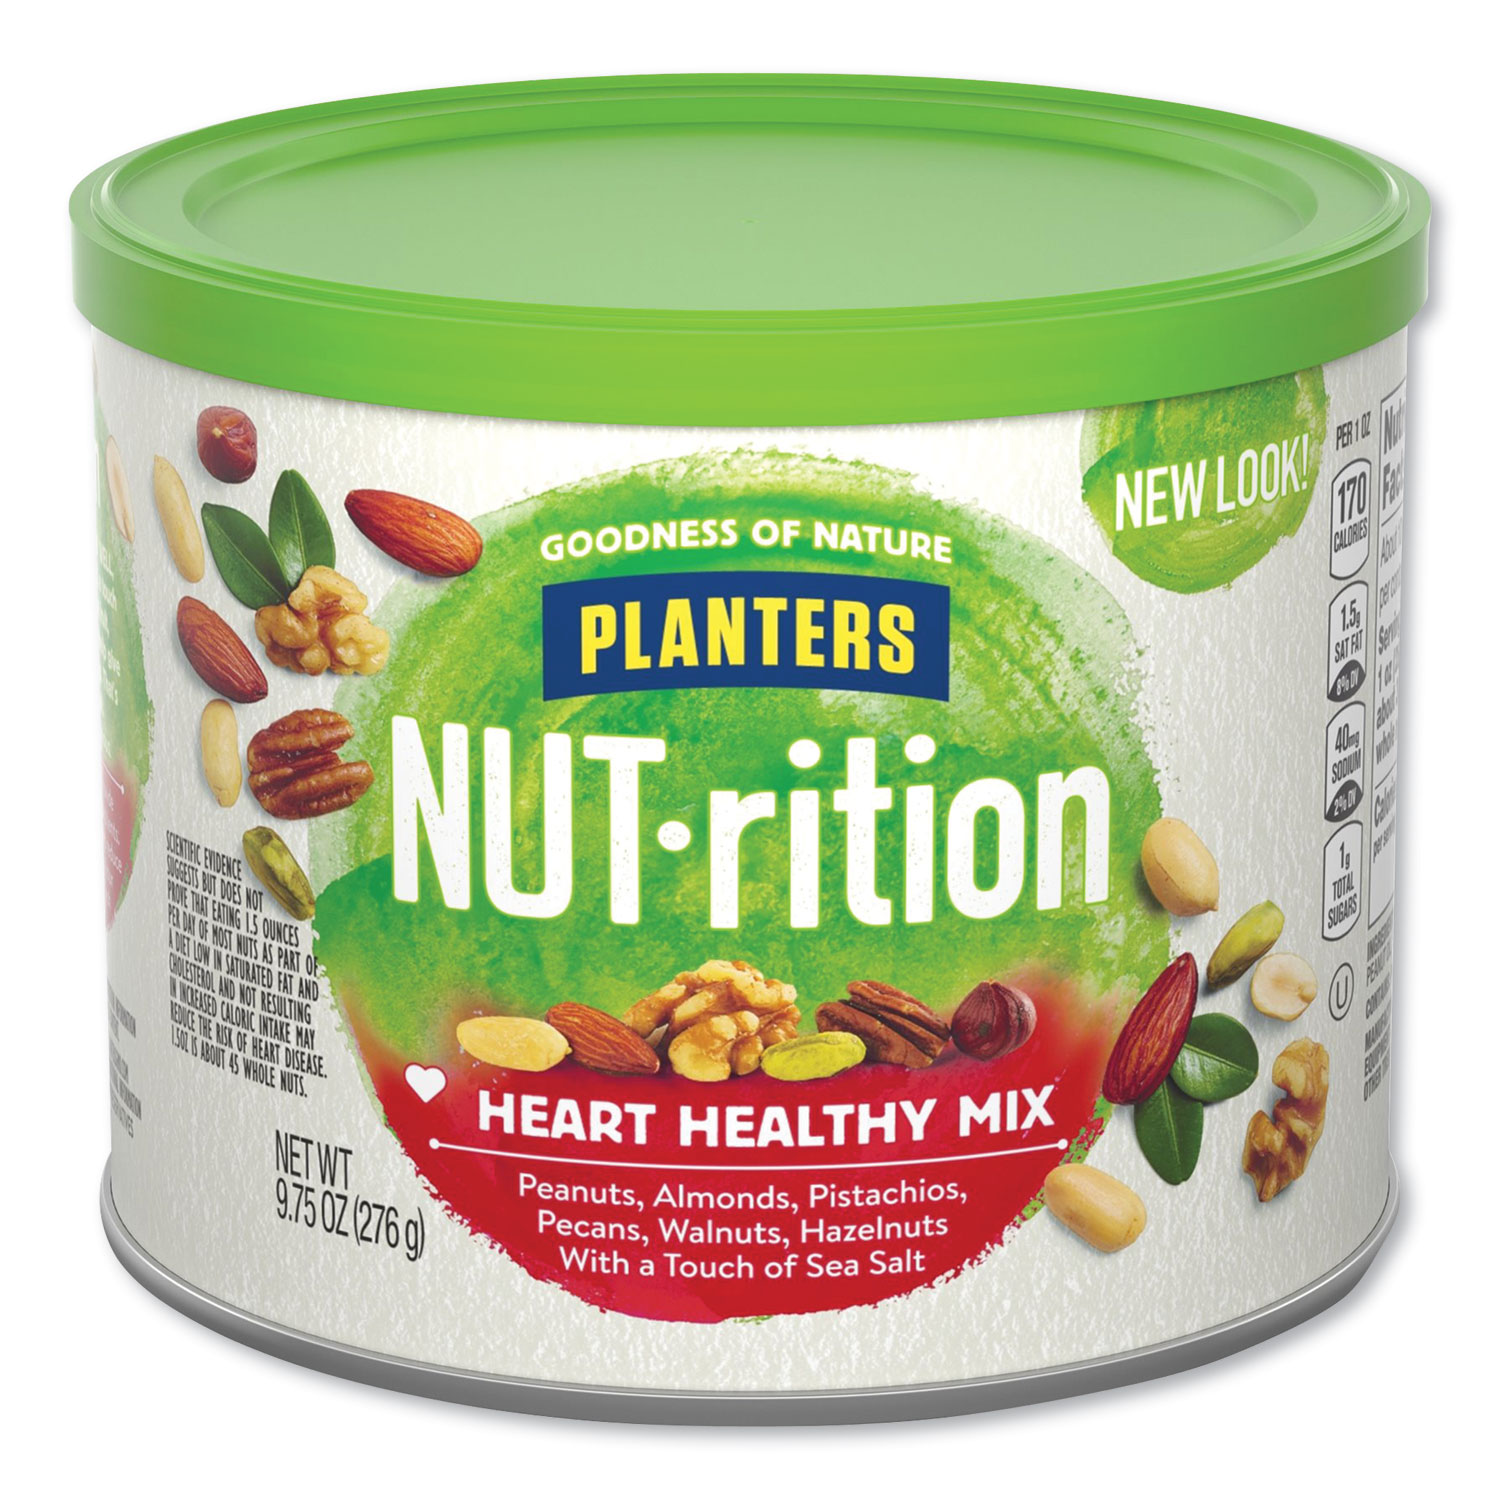  Planters GEN05957 NUT-rition Heart Healthy Mix, 9.75 oz Can (PTN956919) 